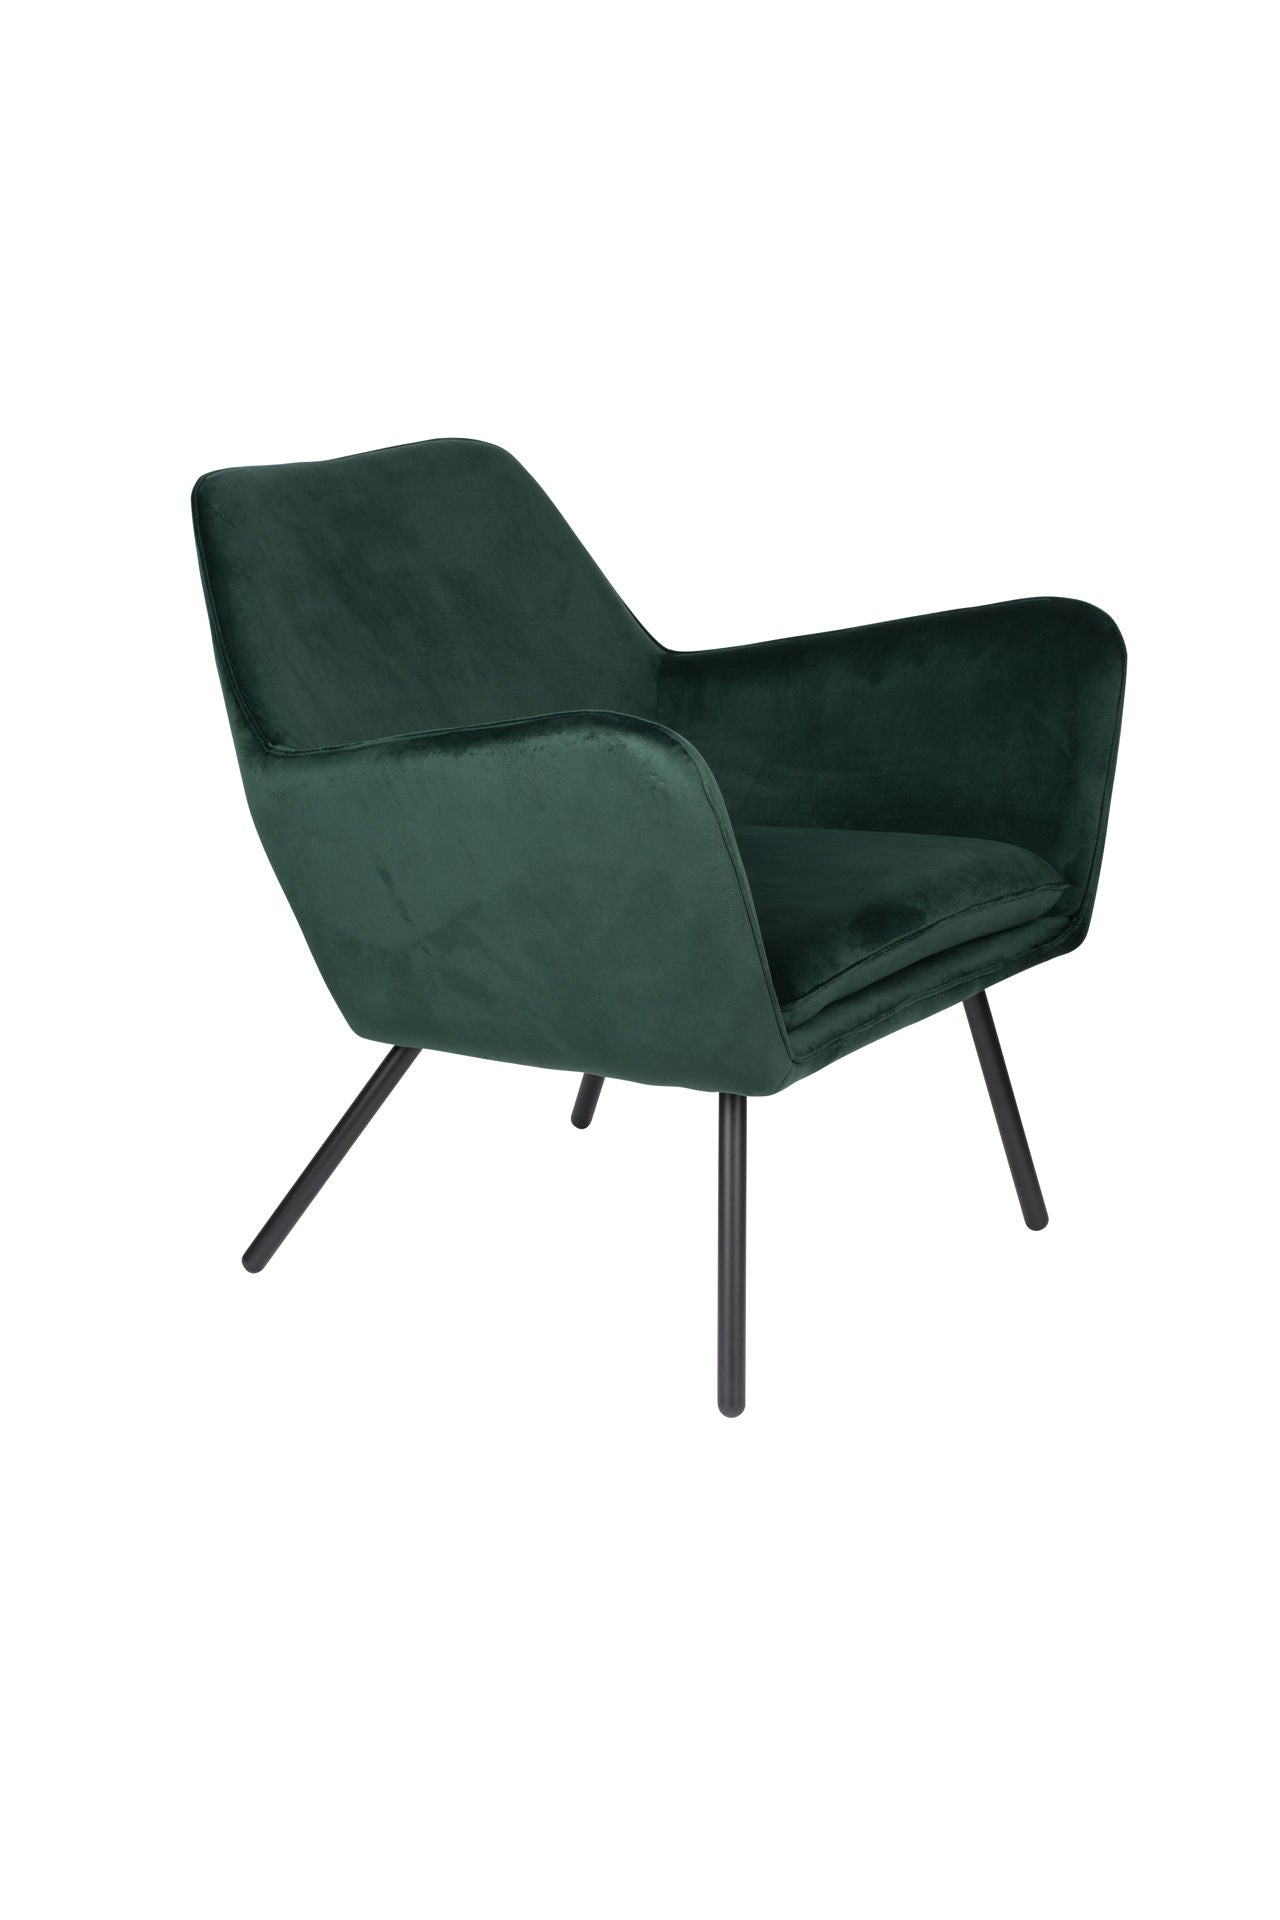 Nancy's Naranja Lounge Chair - Industrieel - Groen, Zwart - Fluweel, Strijk, Multiplex - 76 cm x 80 cm x 78 cm